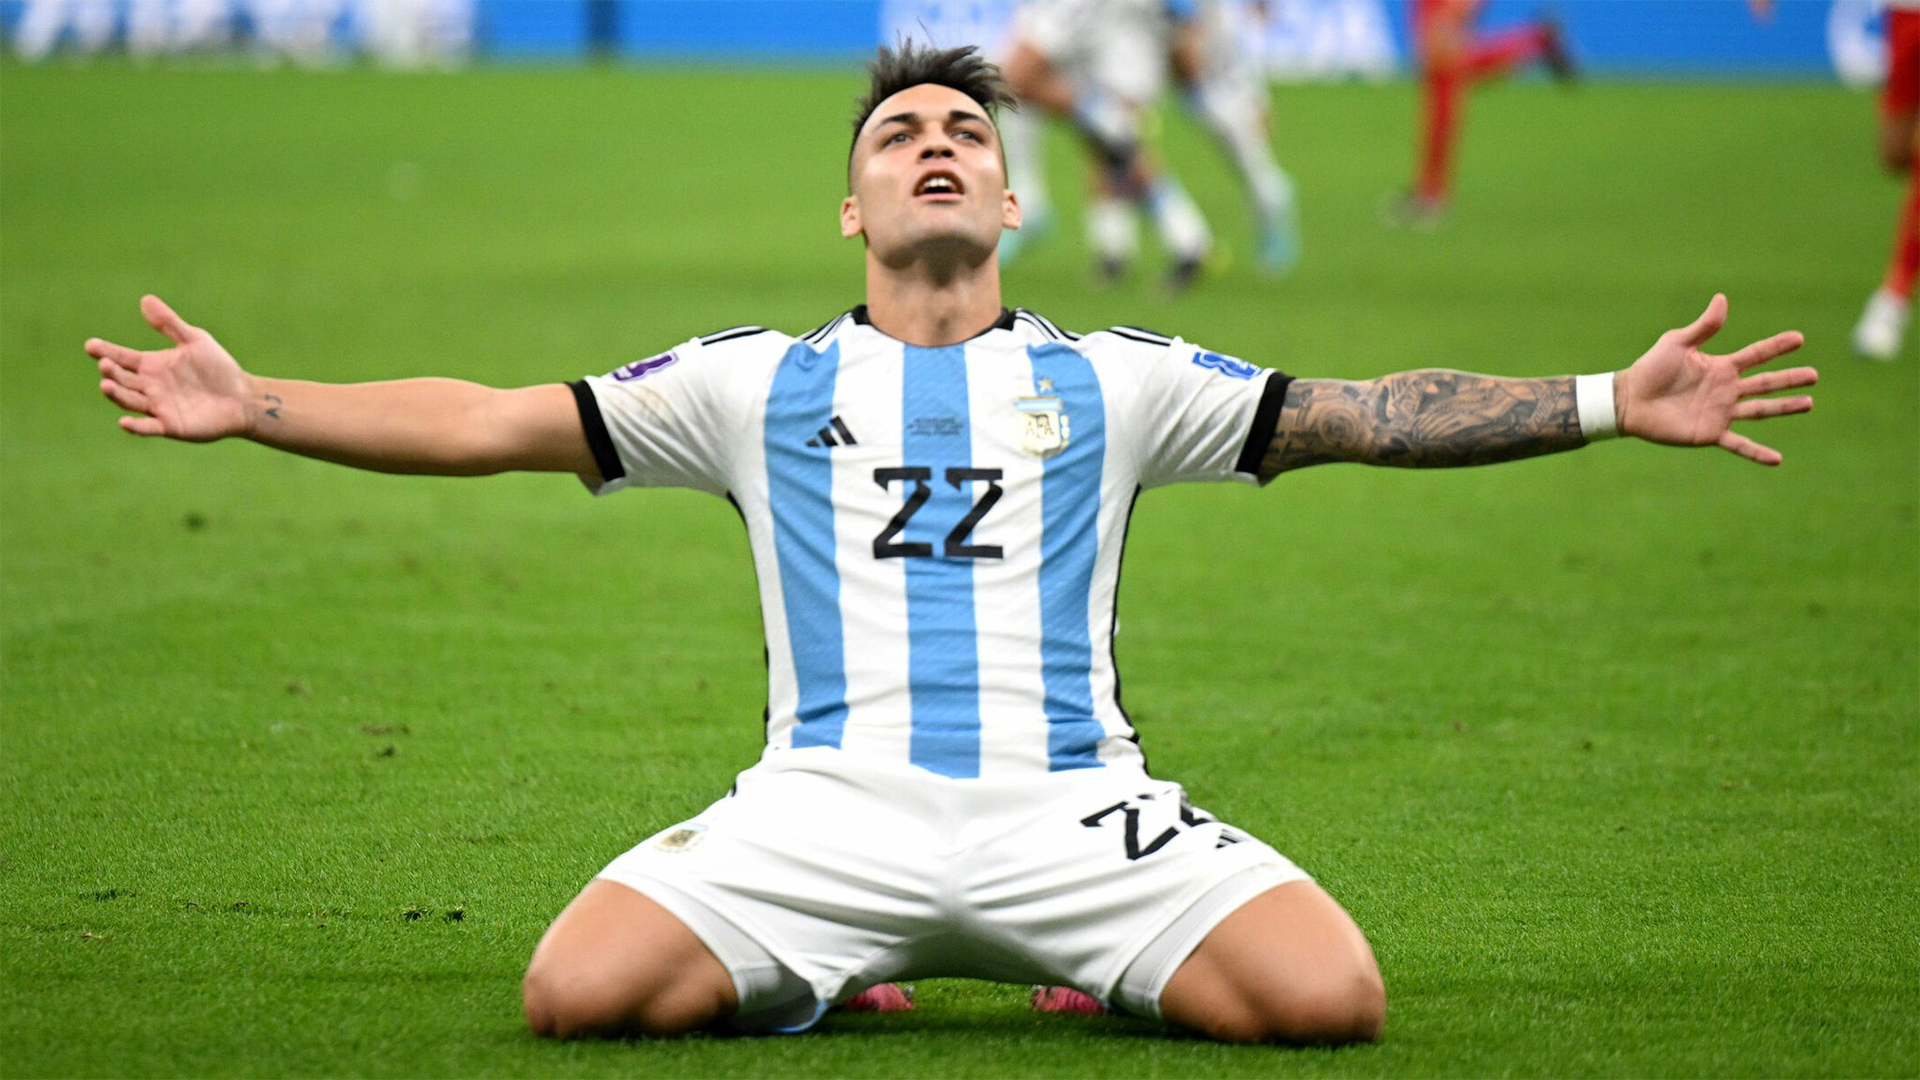 Argentina beat Netherlands 4-3 on penalties to reach semi-finals